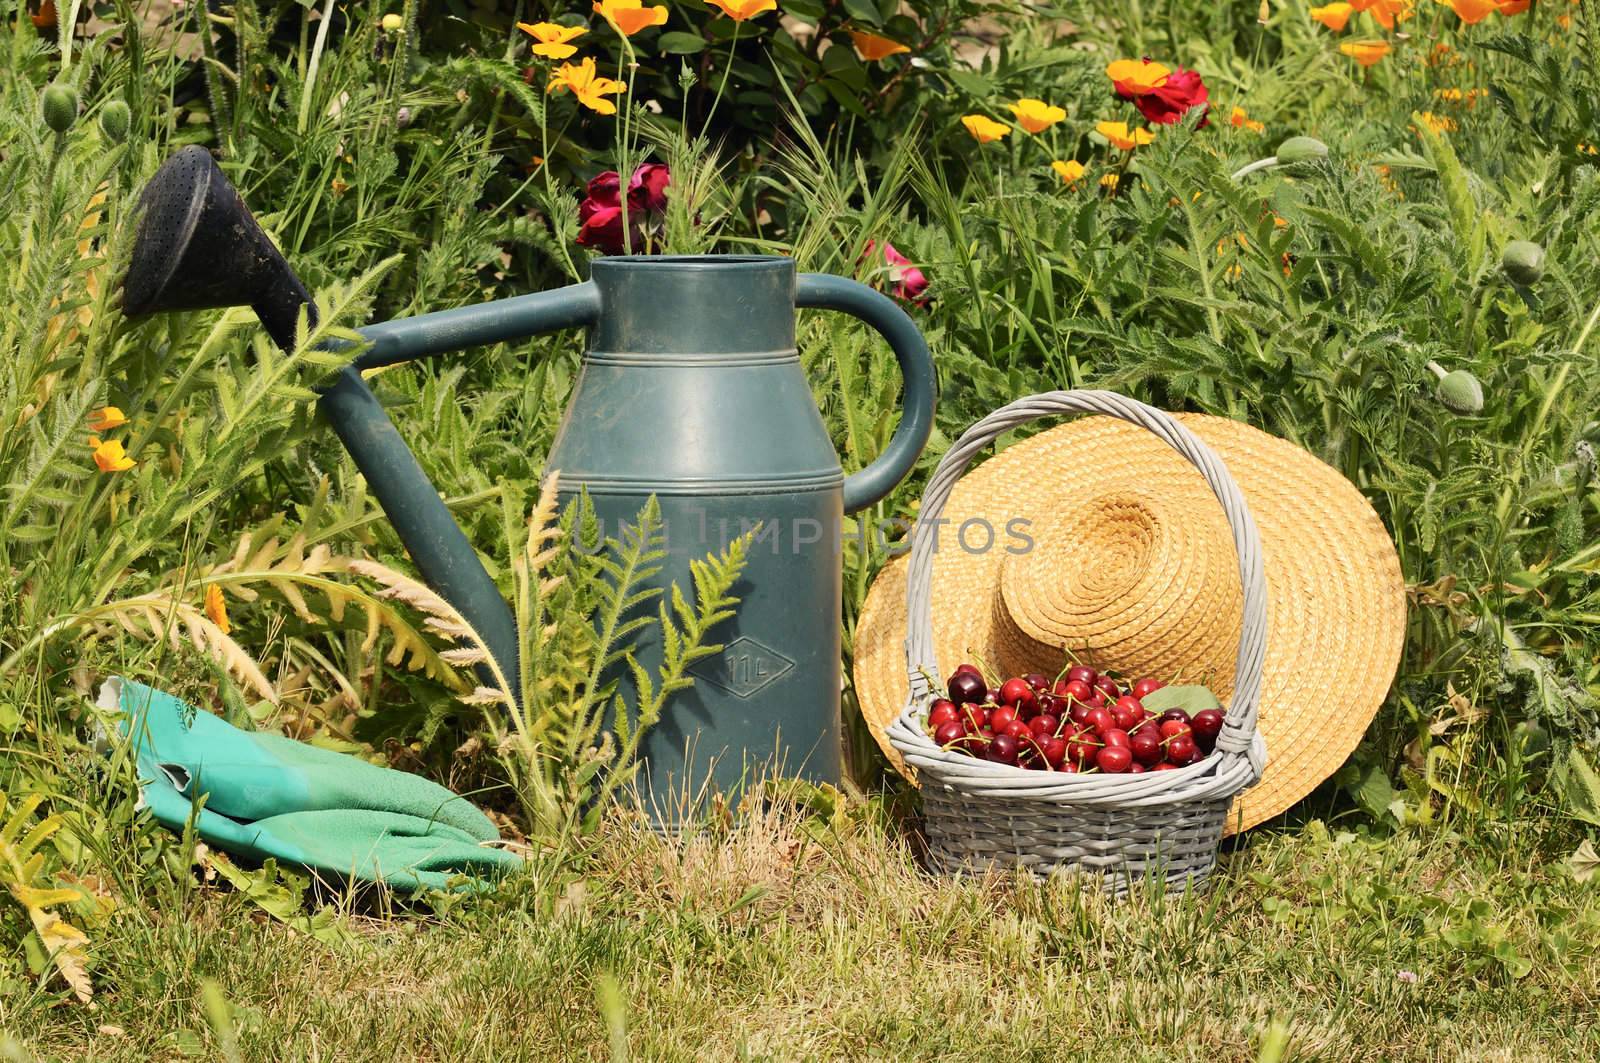 basket of cherries and straw hat in a flower garden